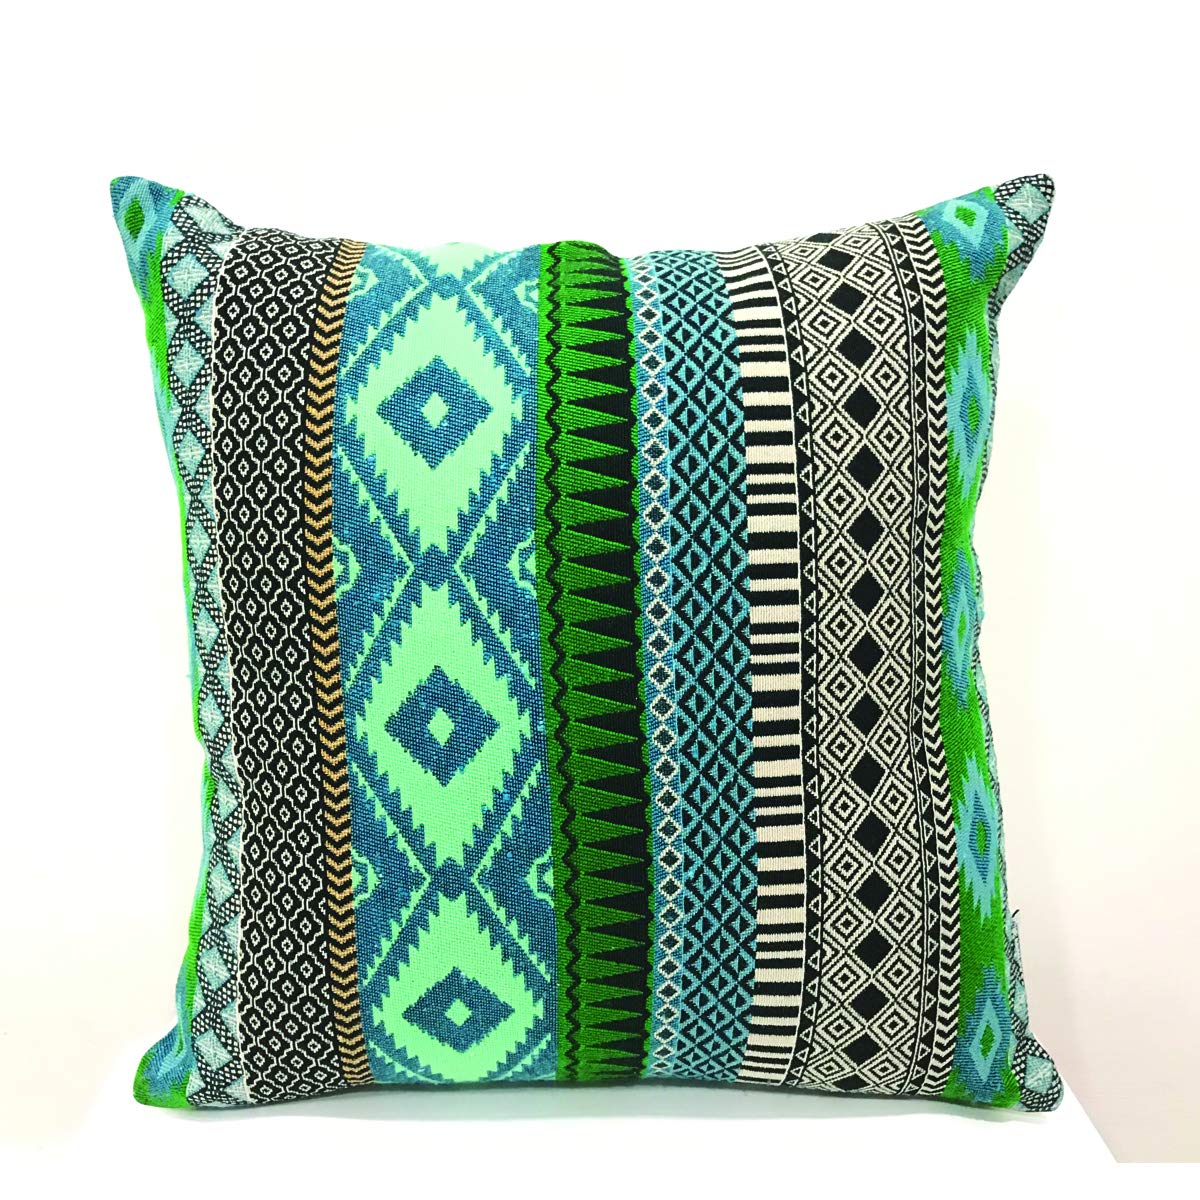 Decorative Hand Weaving Sofa Pillow Cushion Cover Green 16x16